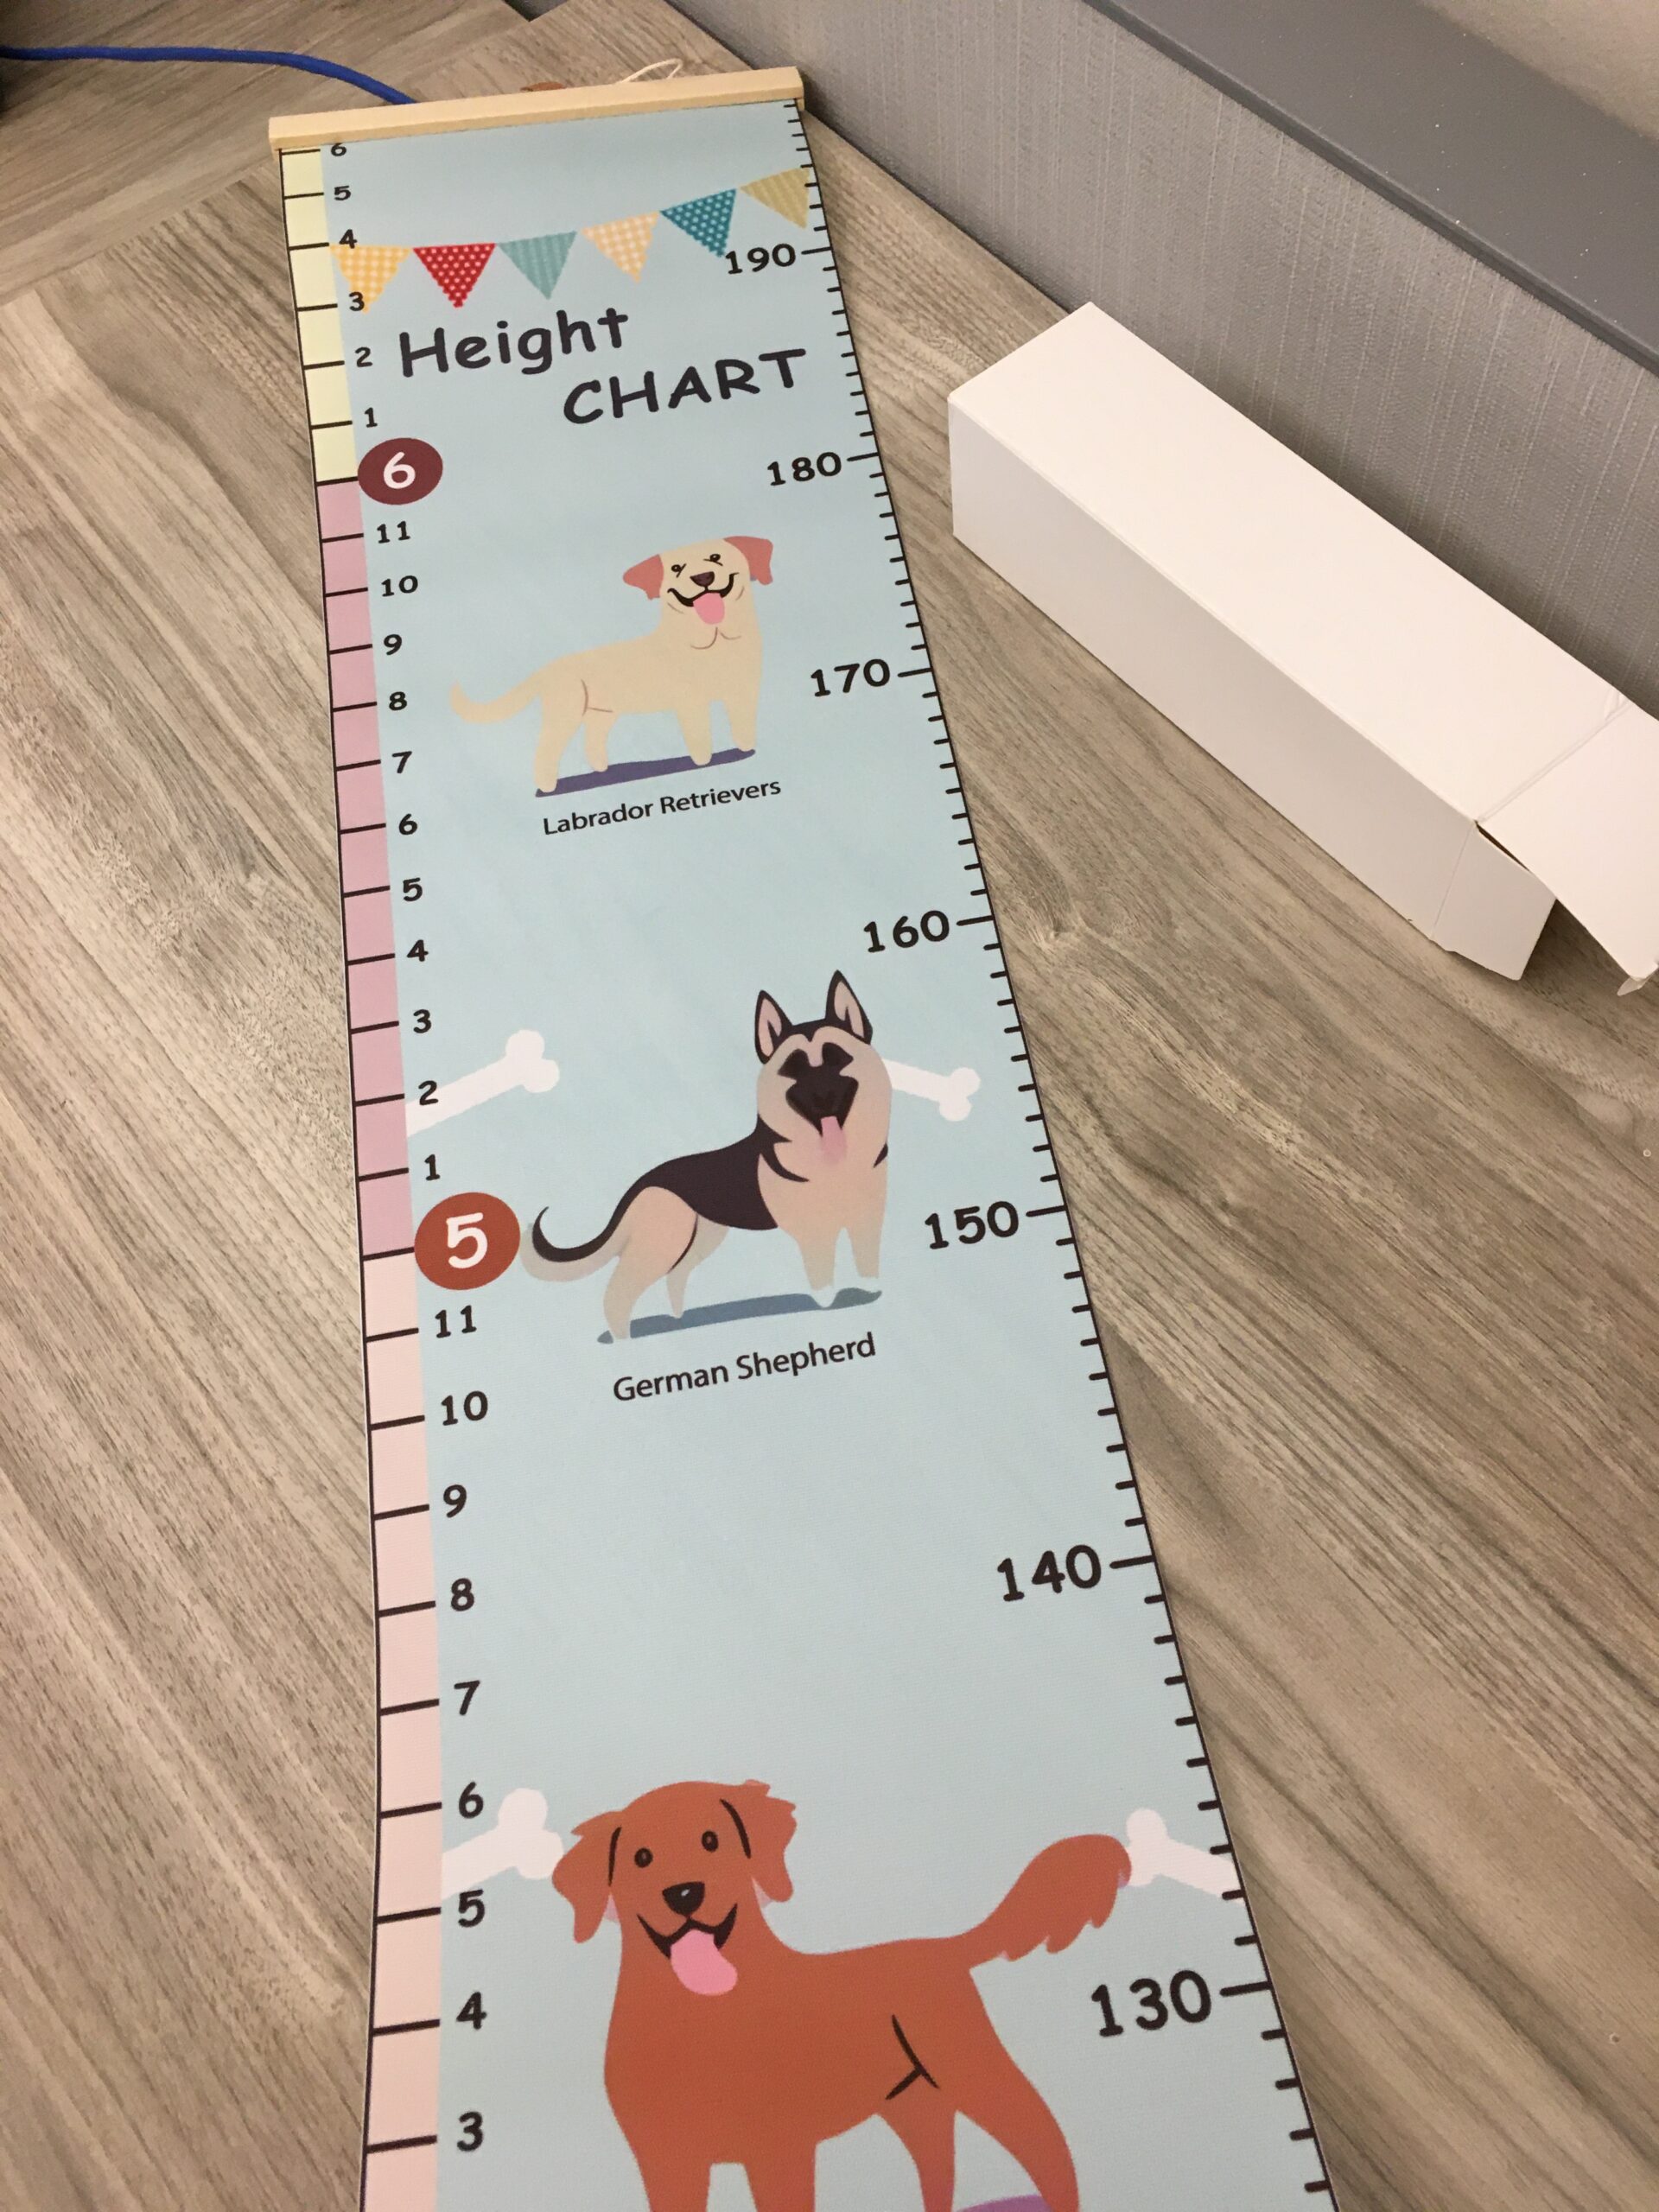 Dog Height Chart